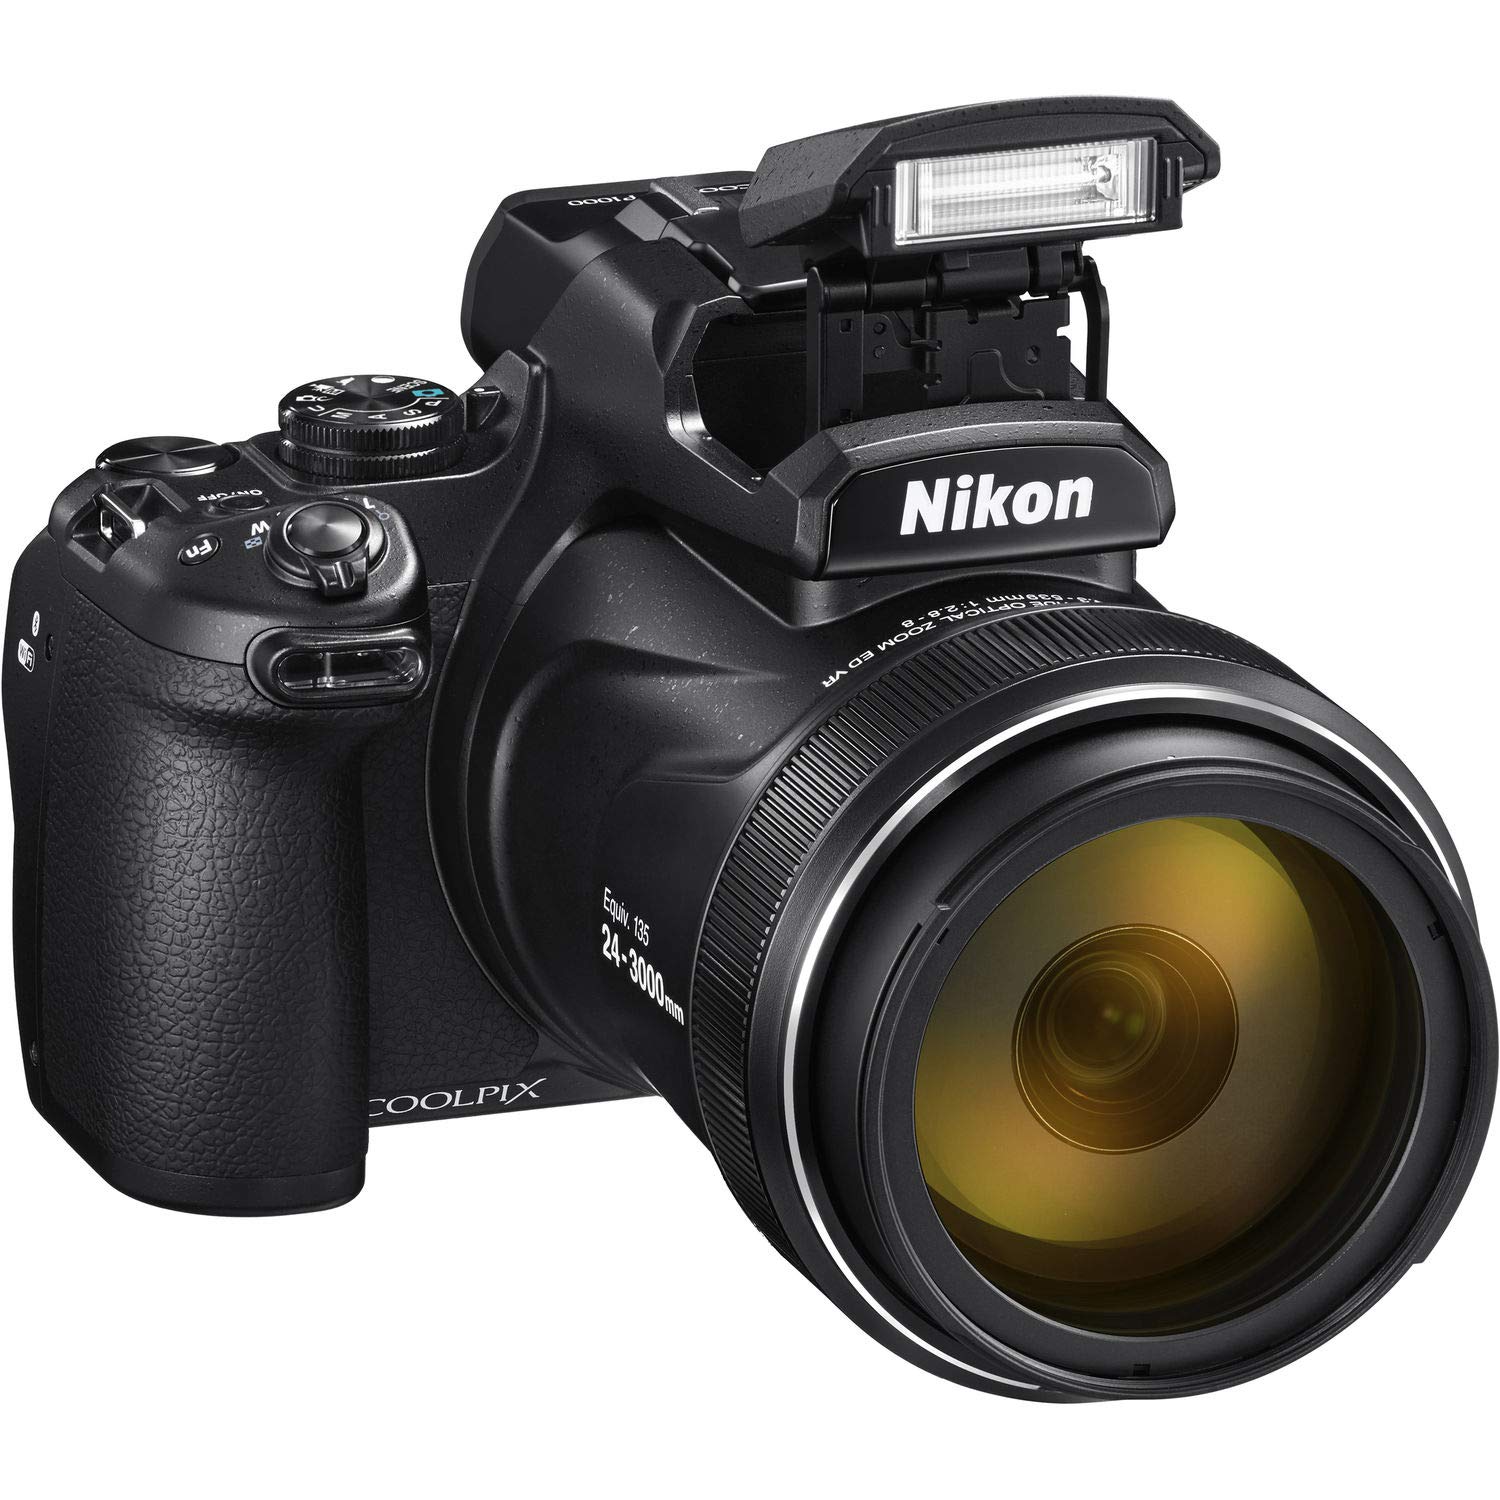 Nikon COOLPIX P1000 Digital Camera + 64GB Memory Card Base Bundle International Model